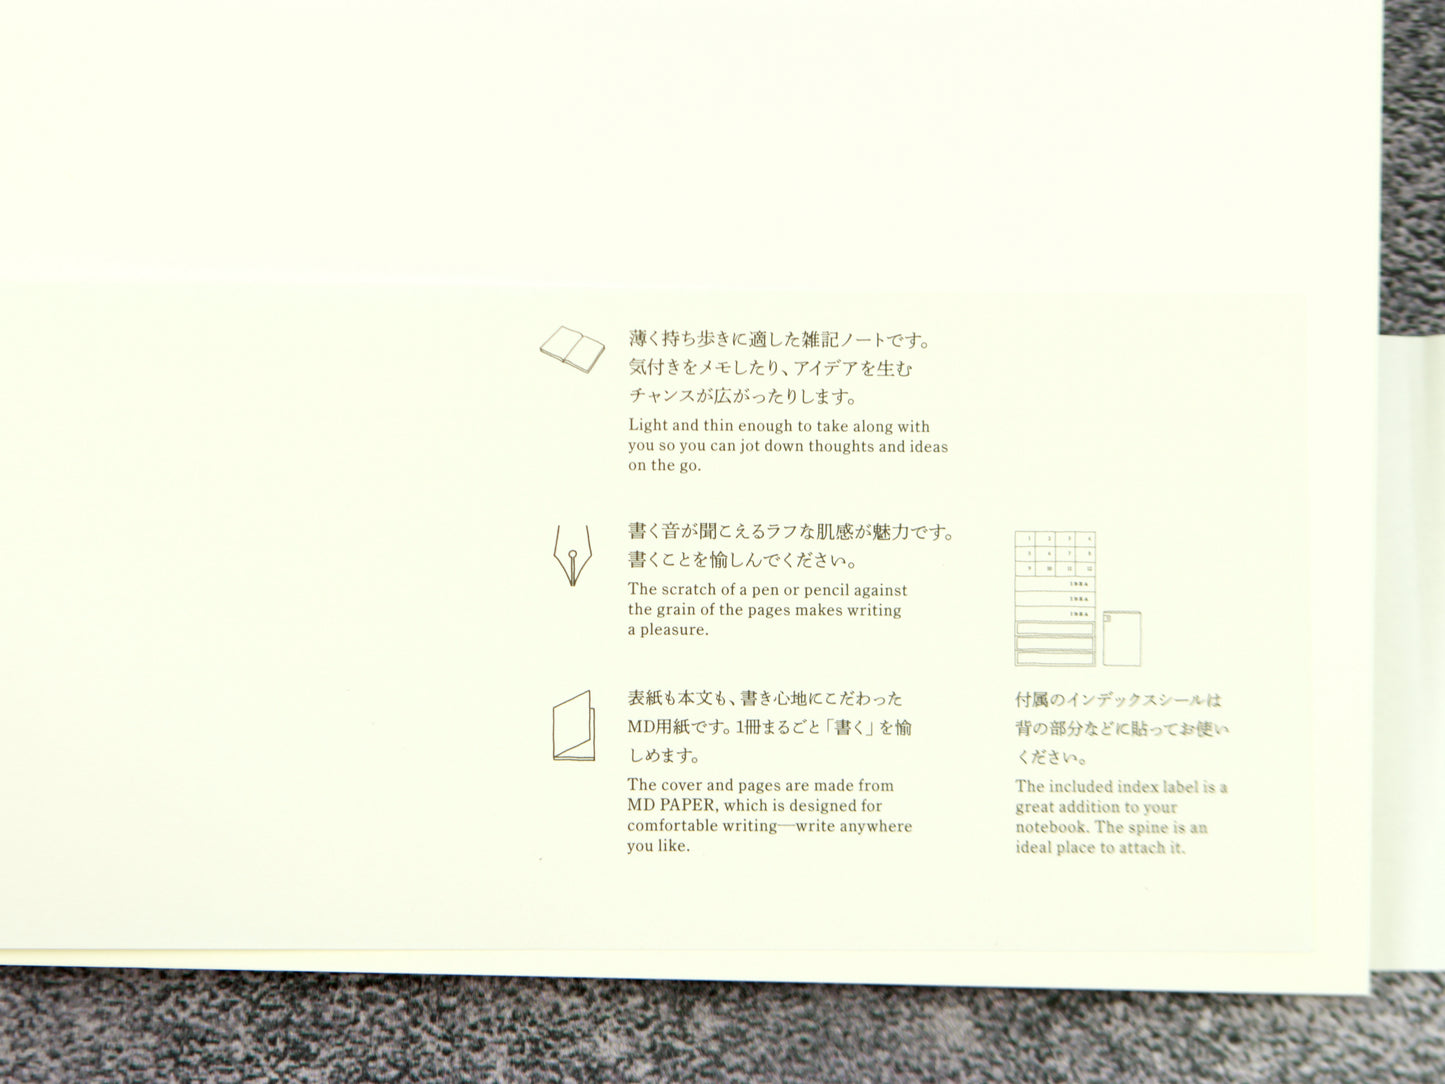 Midori MD Paper A4 Notebook Light (3 Pack)